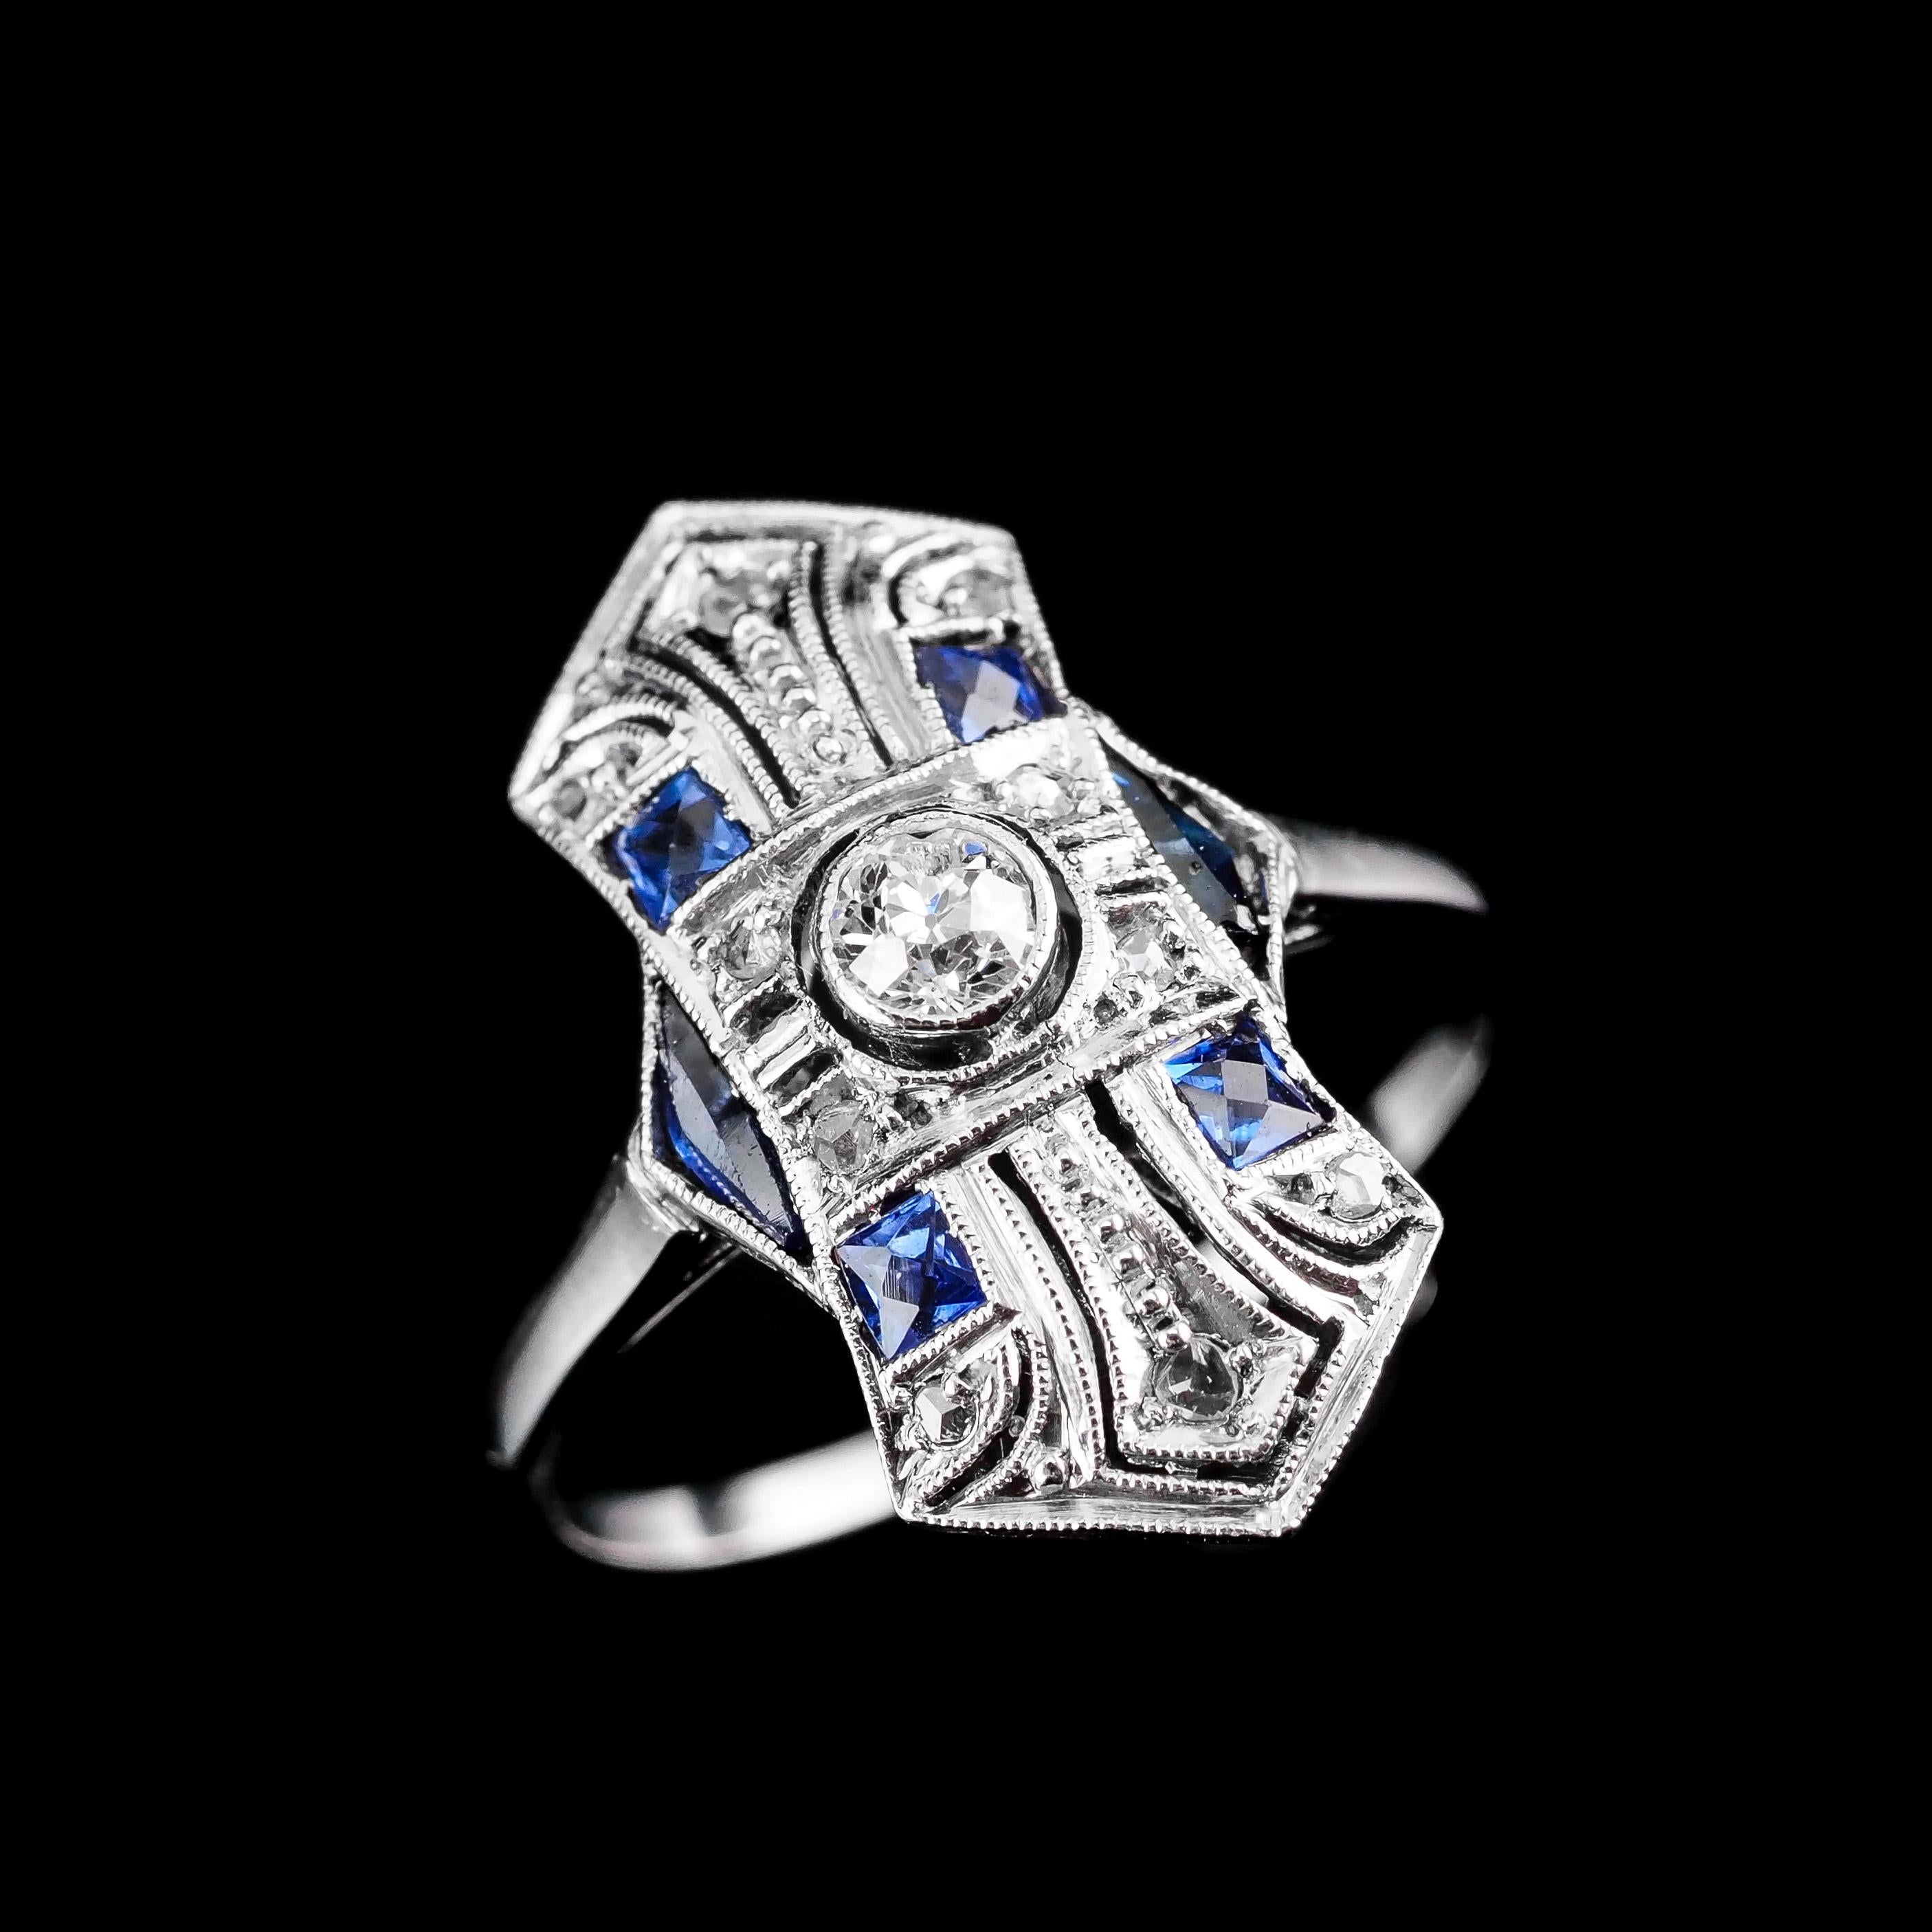 Antique Art Deco 18k White Gold Diamond & Sapphire Ring For Sale 2